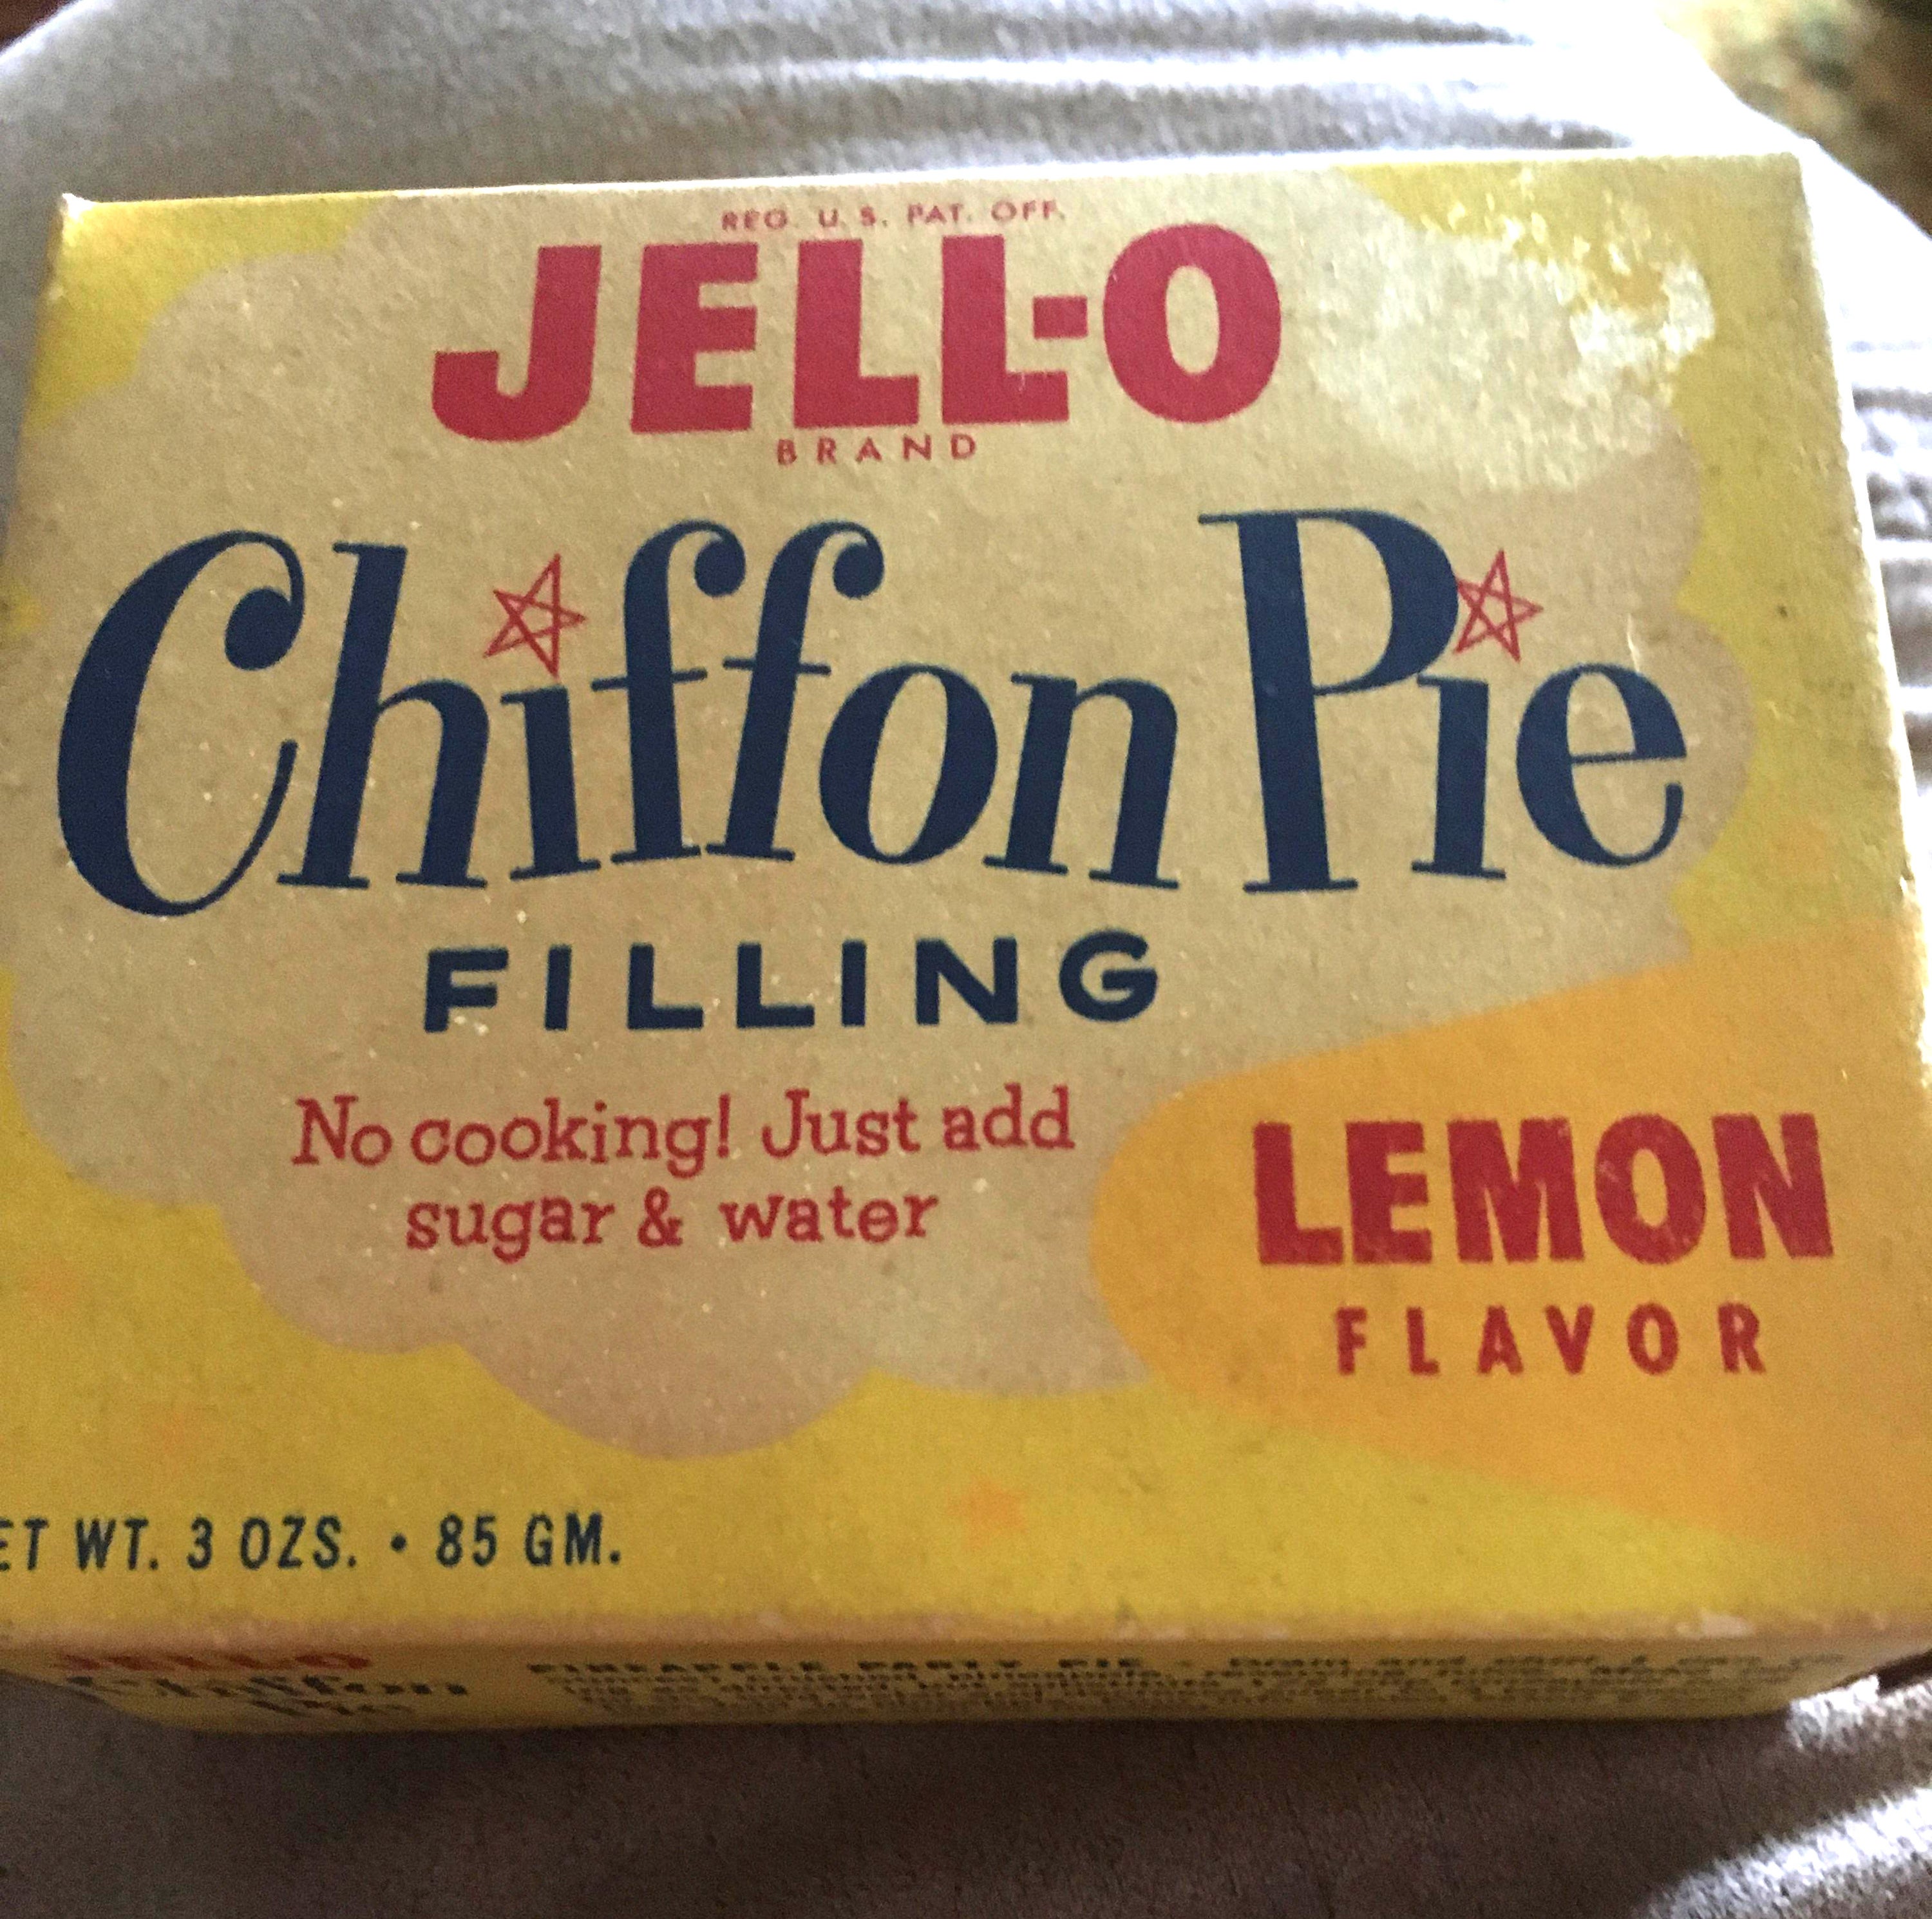 jello with chiffon pie filling